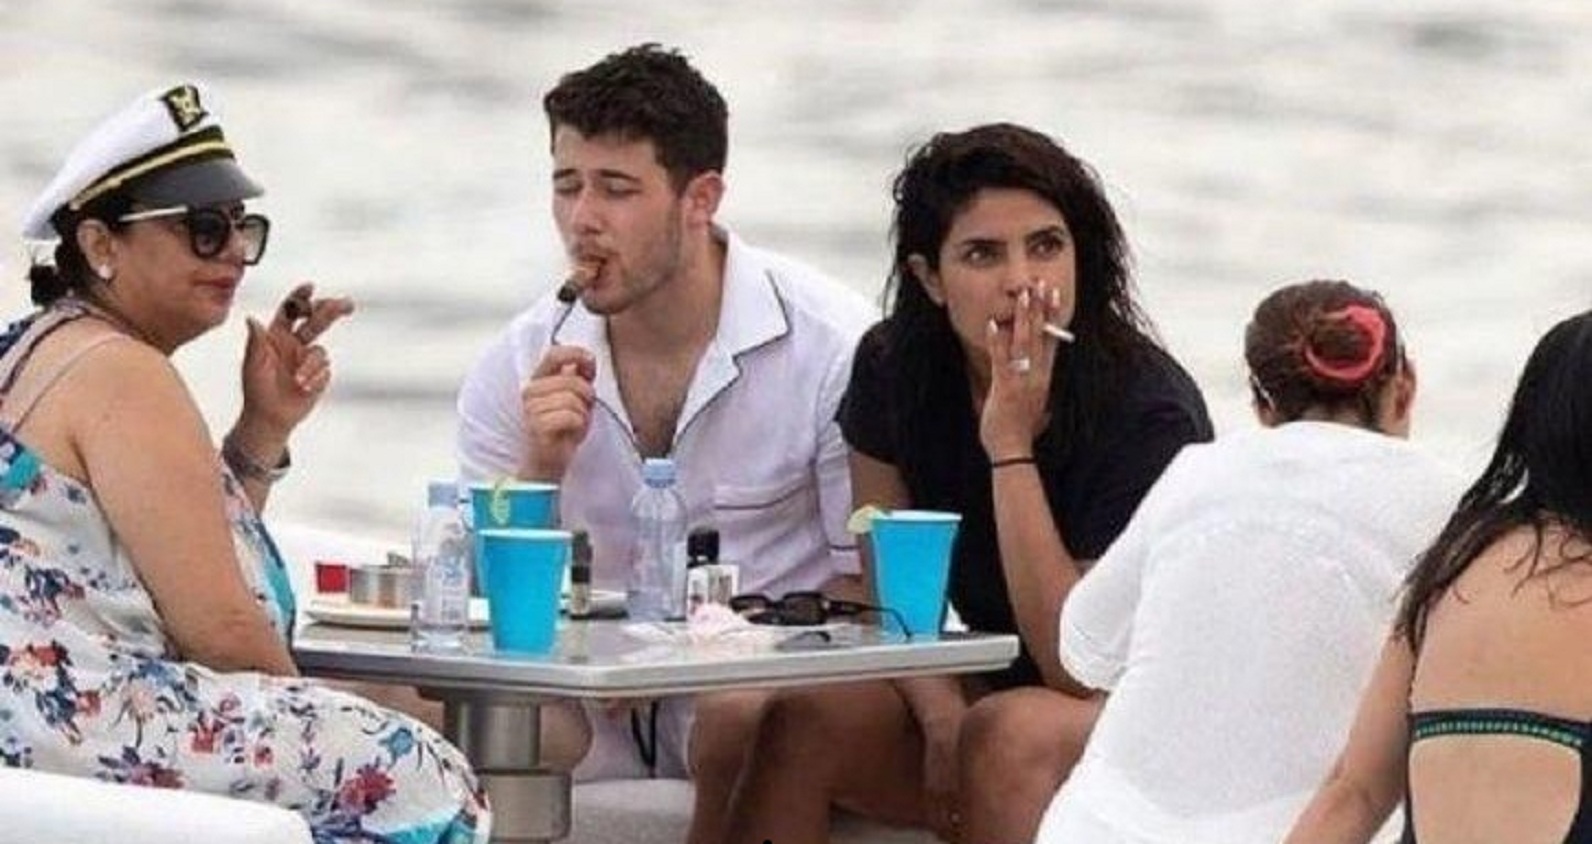 Priyanka Chopra Trolled For Smoking During Her Birthday, Called a “Hypocrite”